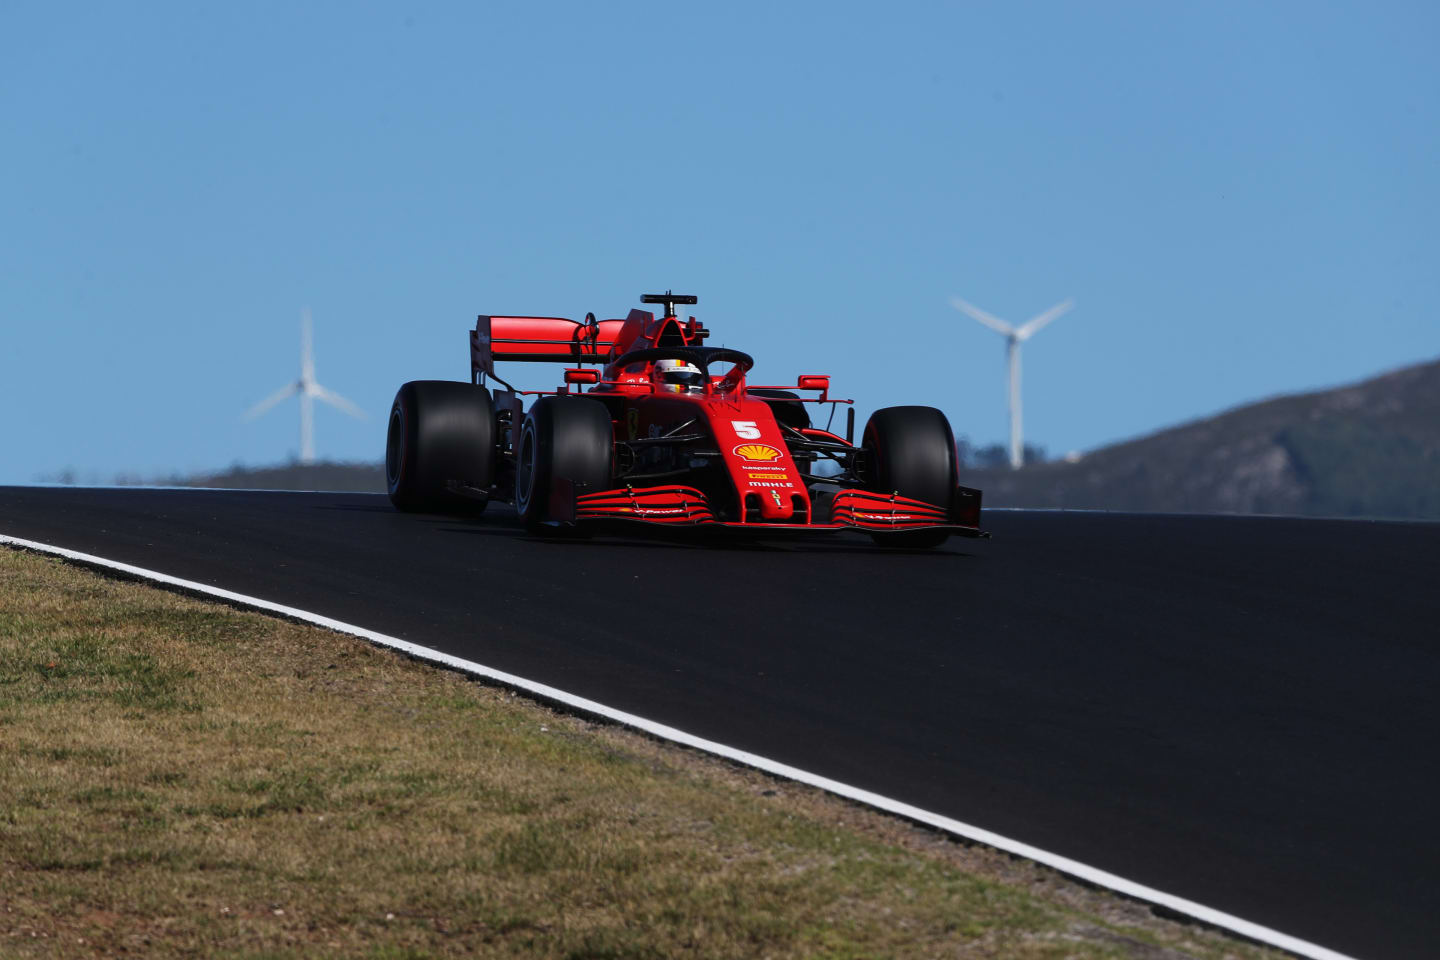 PORTIMAO, PORTUGAL - OCTOBER 24: Sebastian Vettel of Germany driving the (5) Scuderia Ferrari